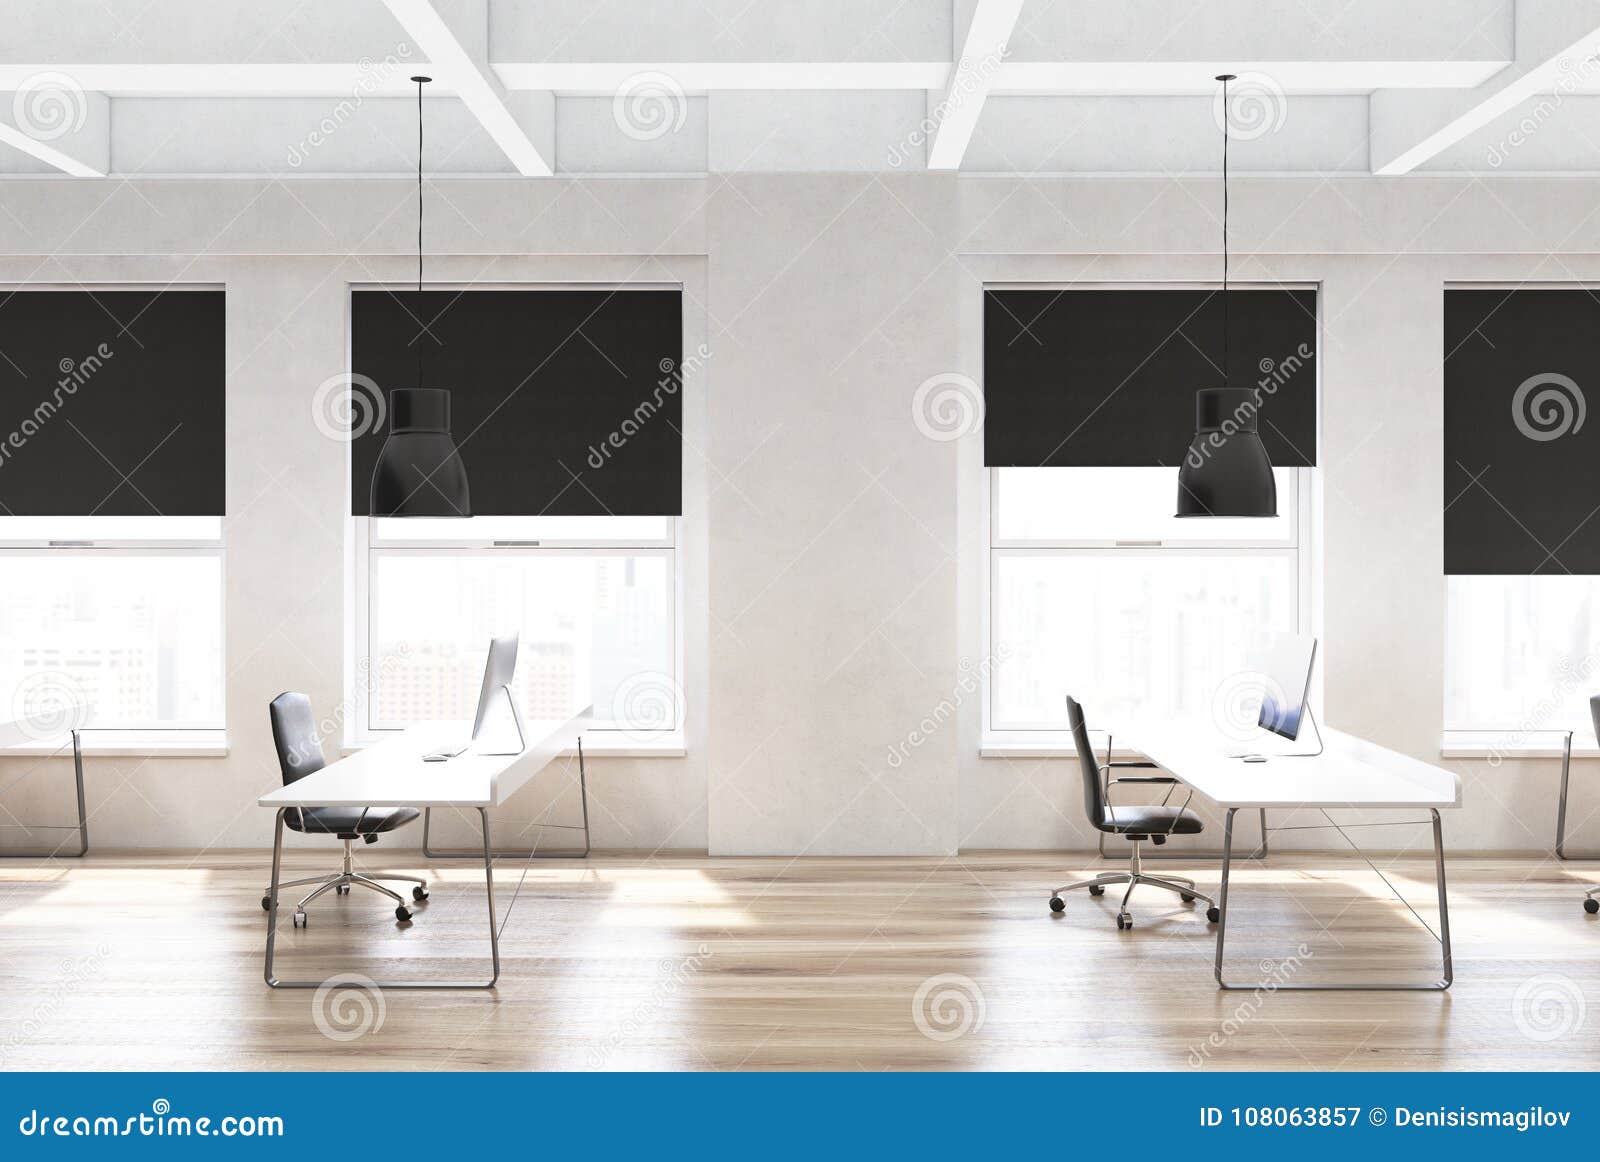 Wooden Floor Open Space Office Rows Of Desks Stock Illustration